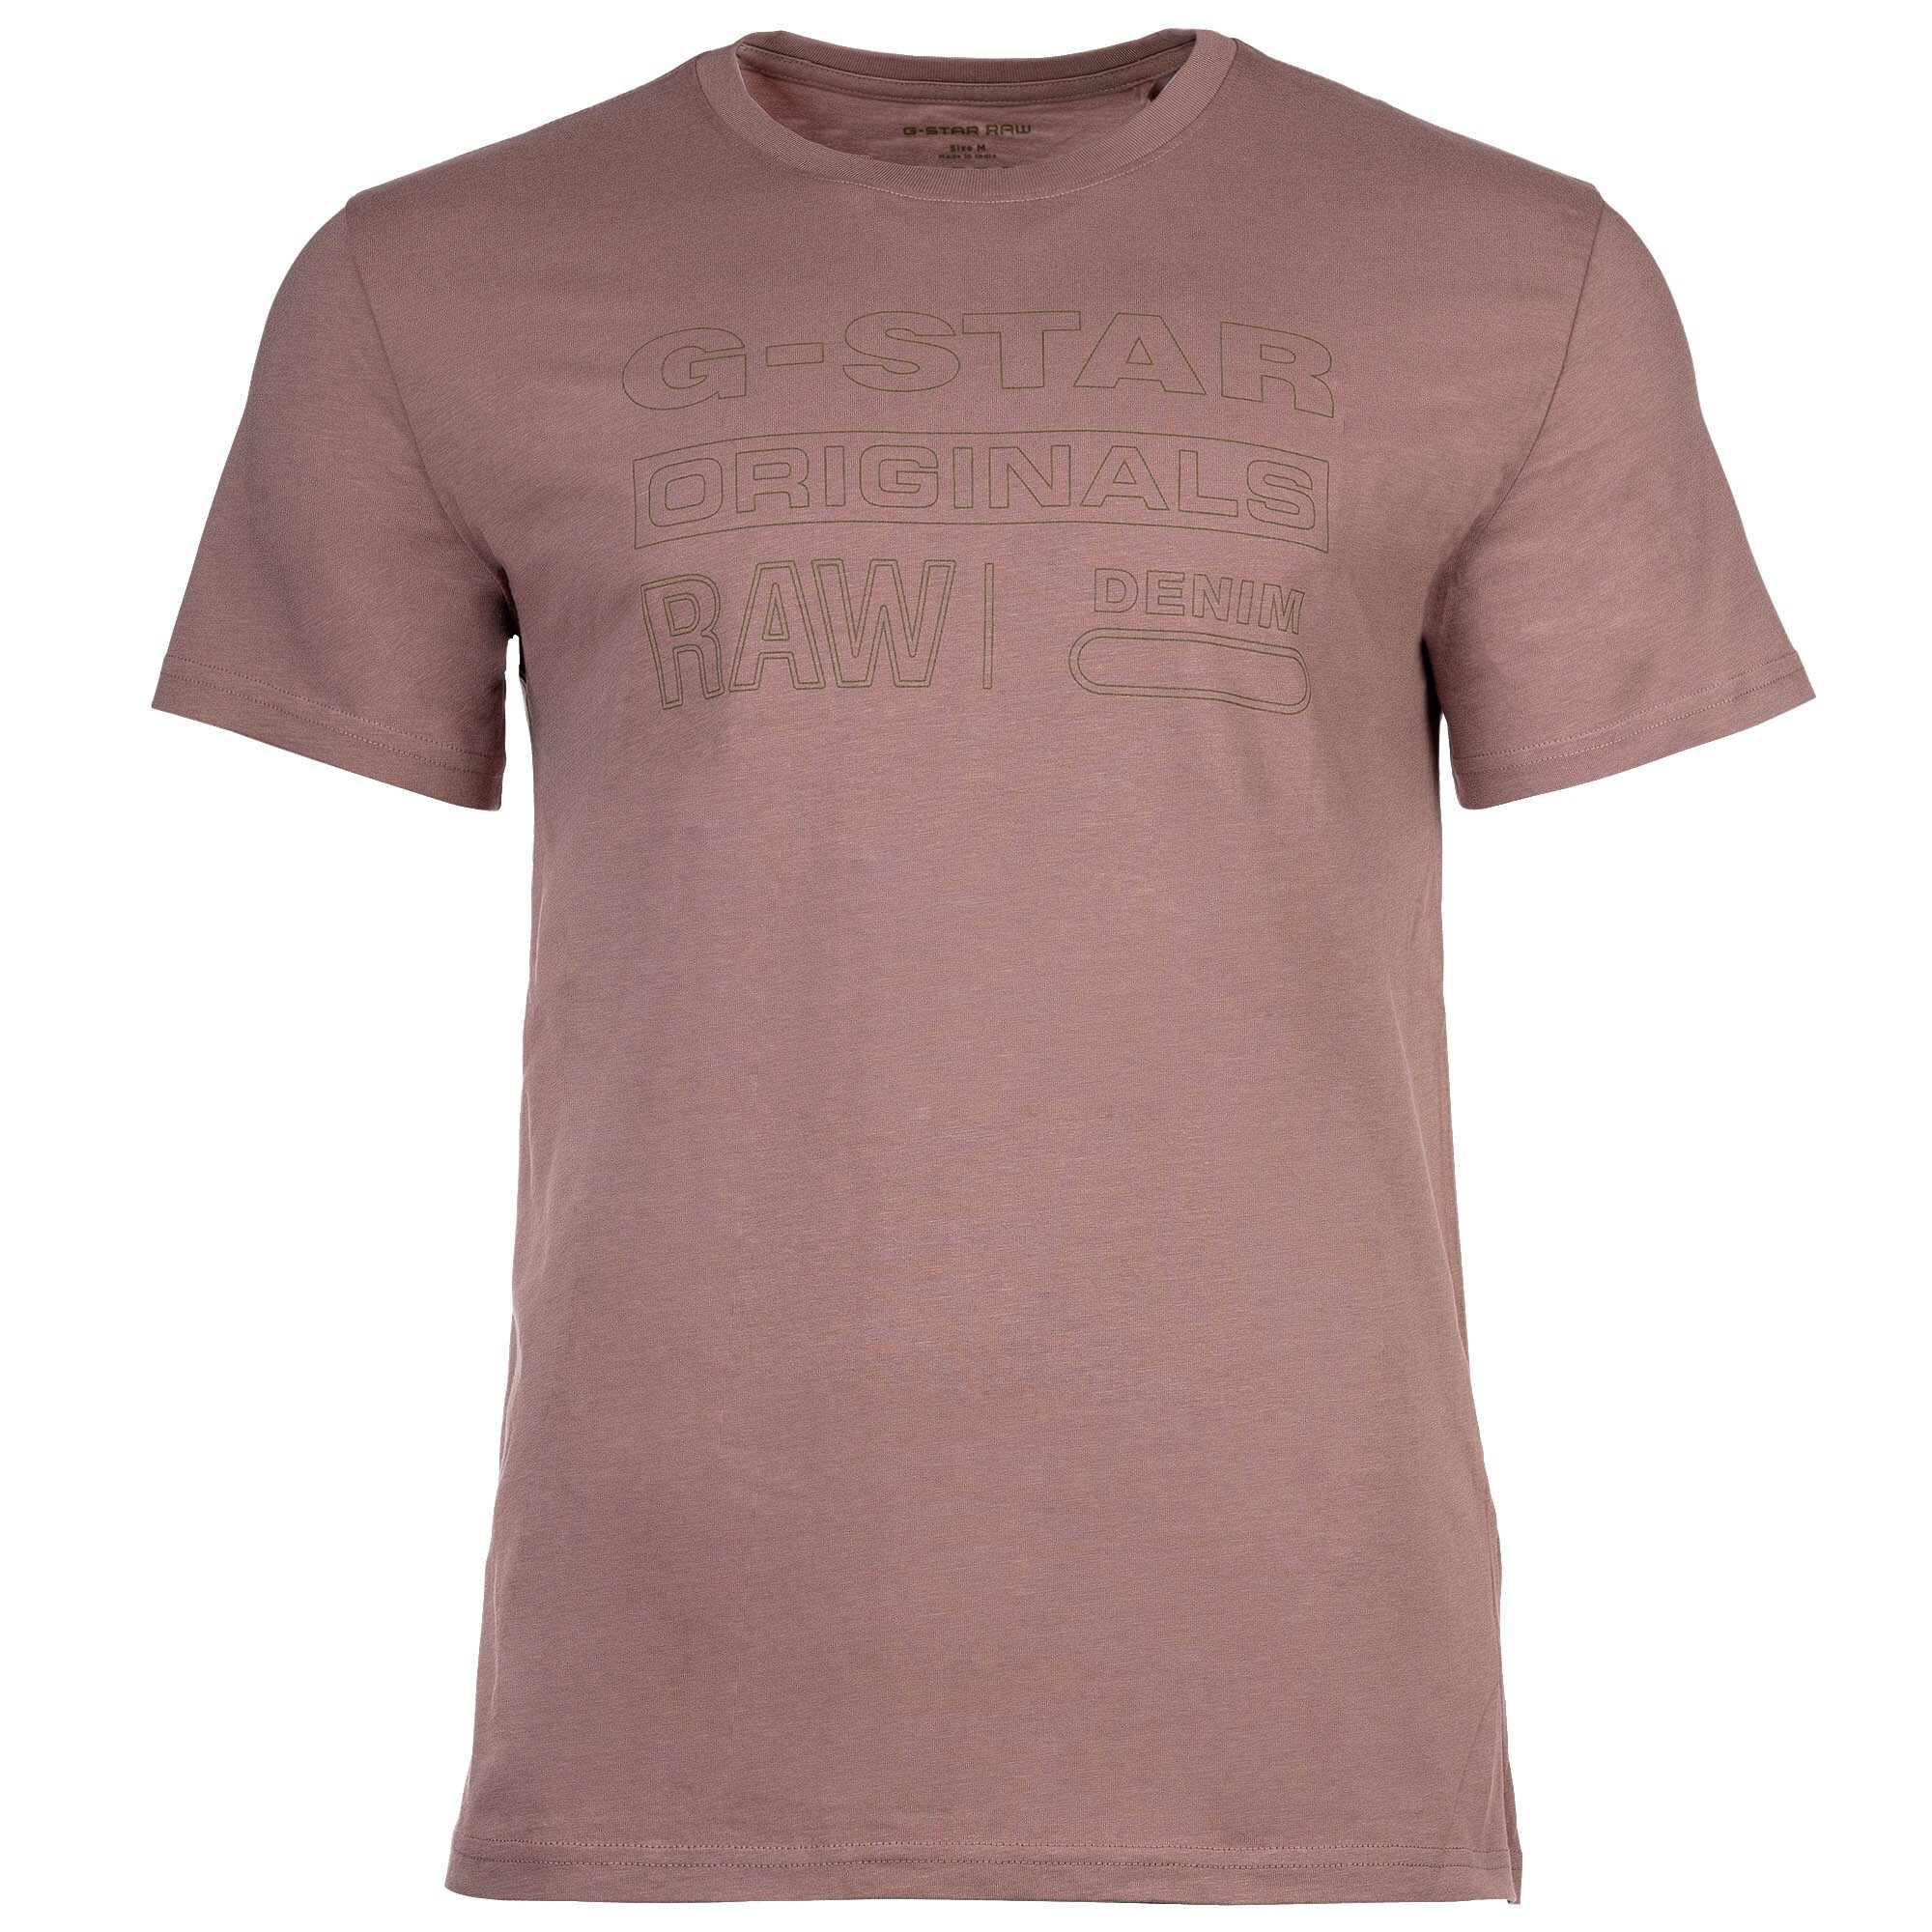 G-Star RAW T-Shirt Herren T-Shirt - Originals, Rundhals, RAW-Logo Braun